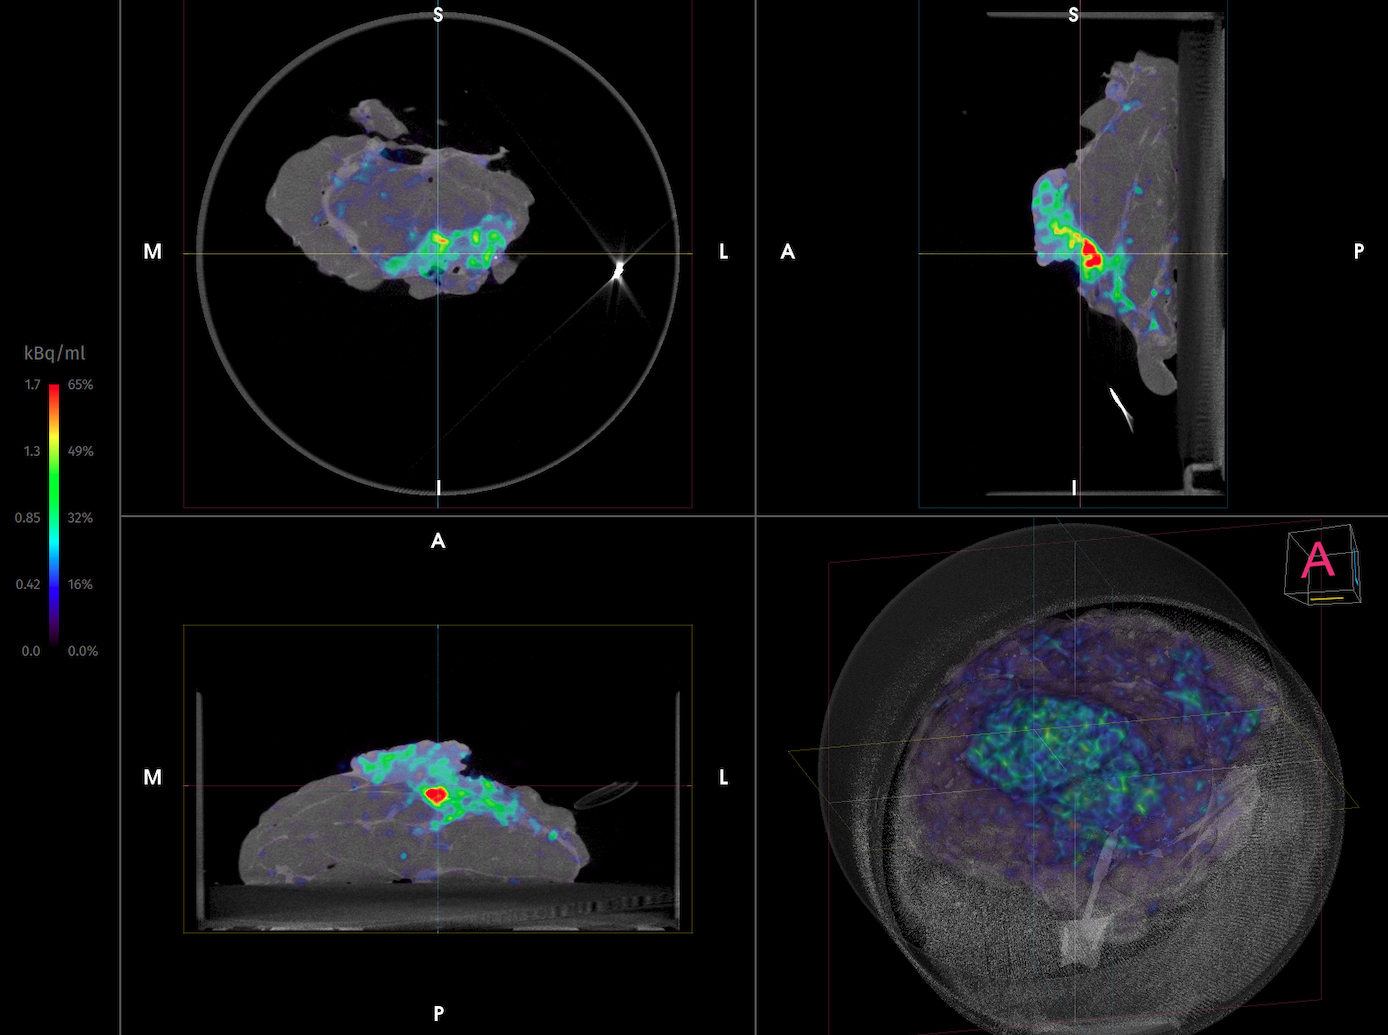 Imaging case 14:
Breast Cancer - Ductal Carcinoma In Situ